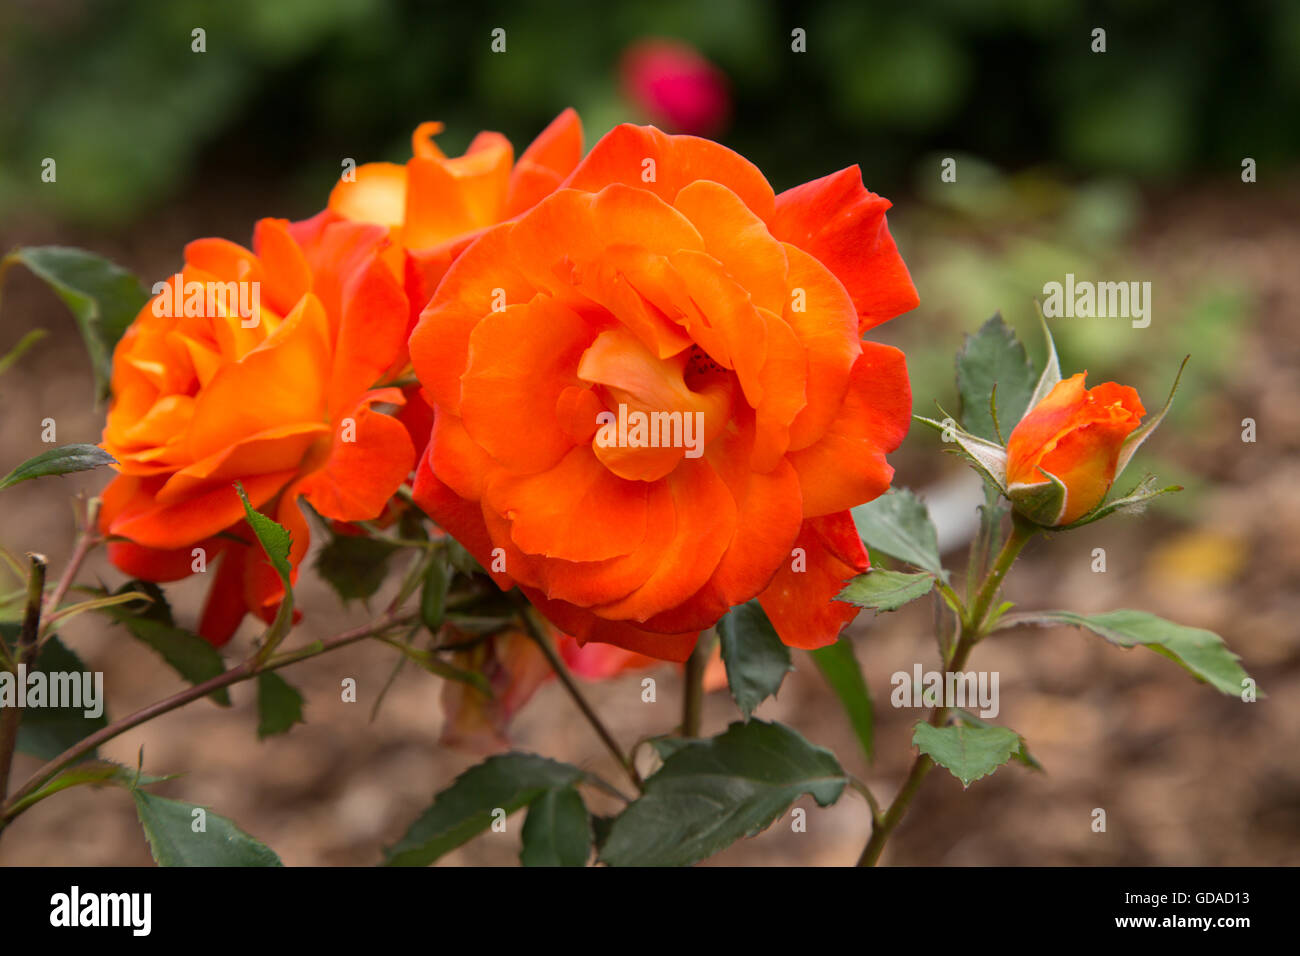 Award winning rose Super Trouper, a bright orange floribunda, which won novelty rose of the year in 2010 Stock Photo